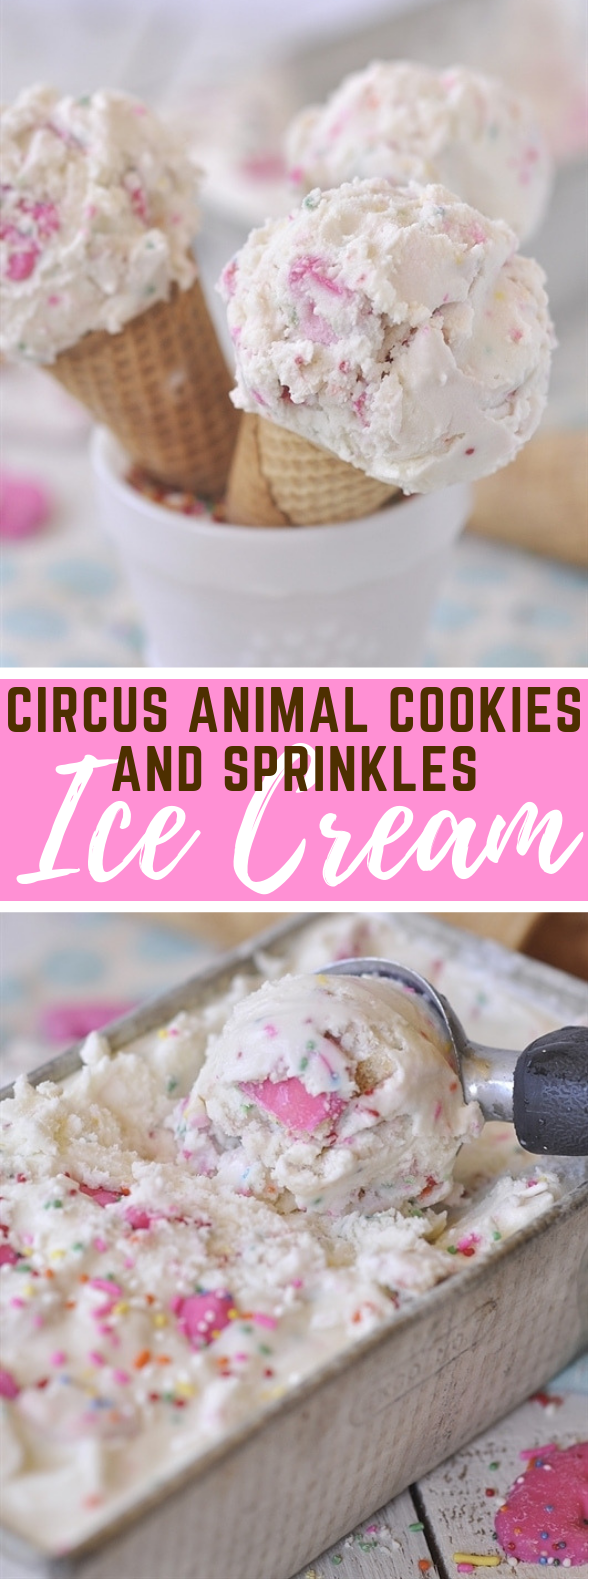 Circus Animal Cookies and Sprinkles Ice Cream #dessert #yummydessert